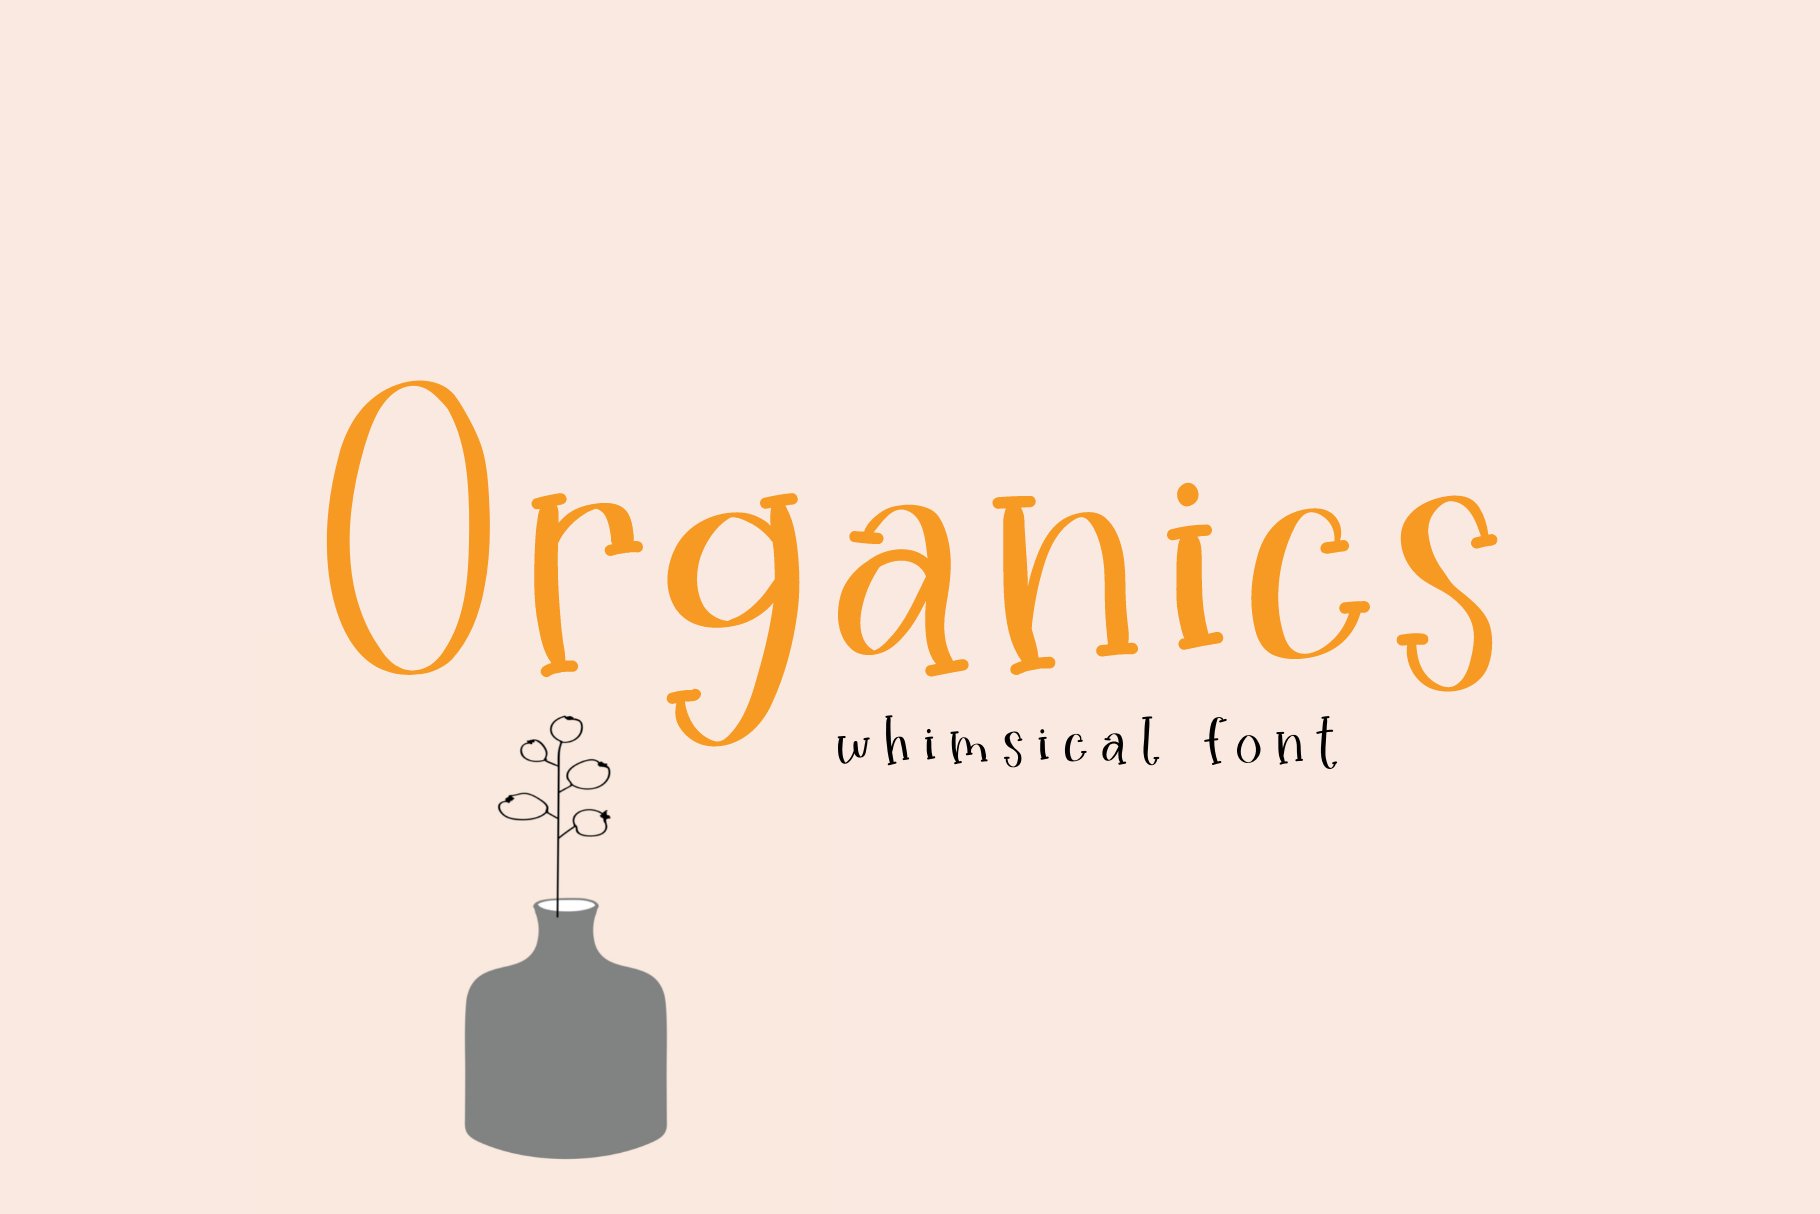 Organics Handwritten Font cover image.